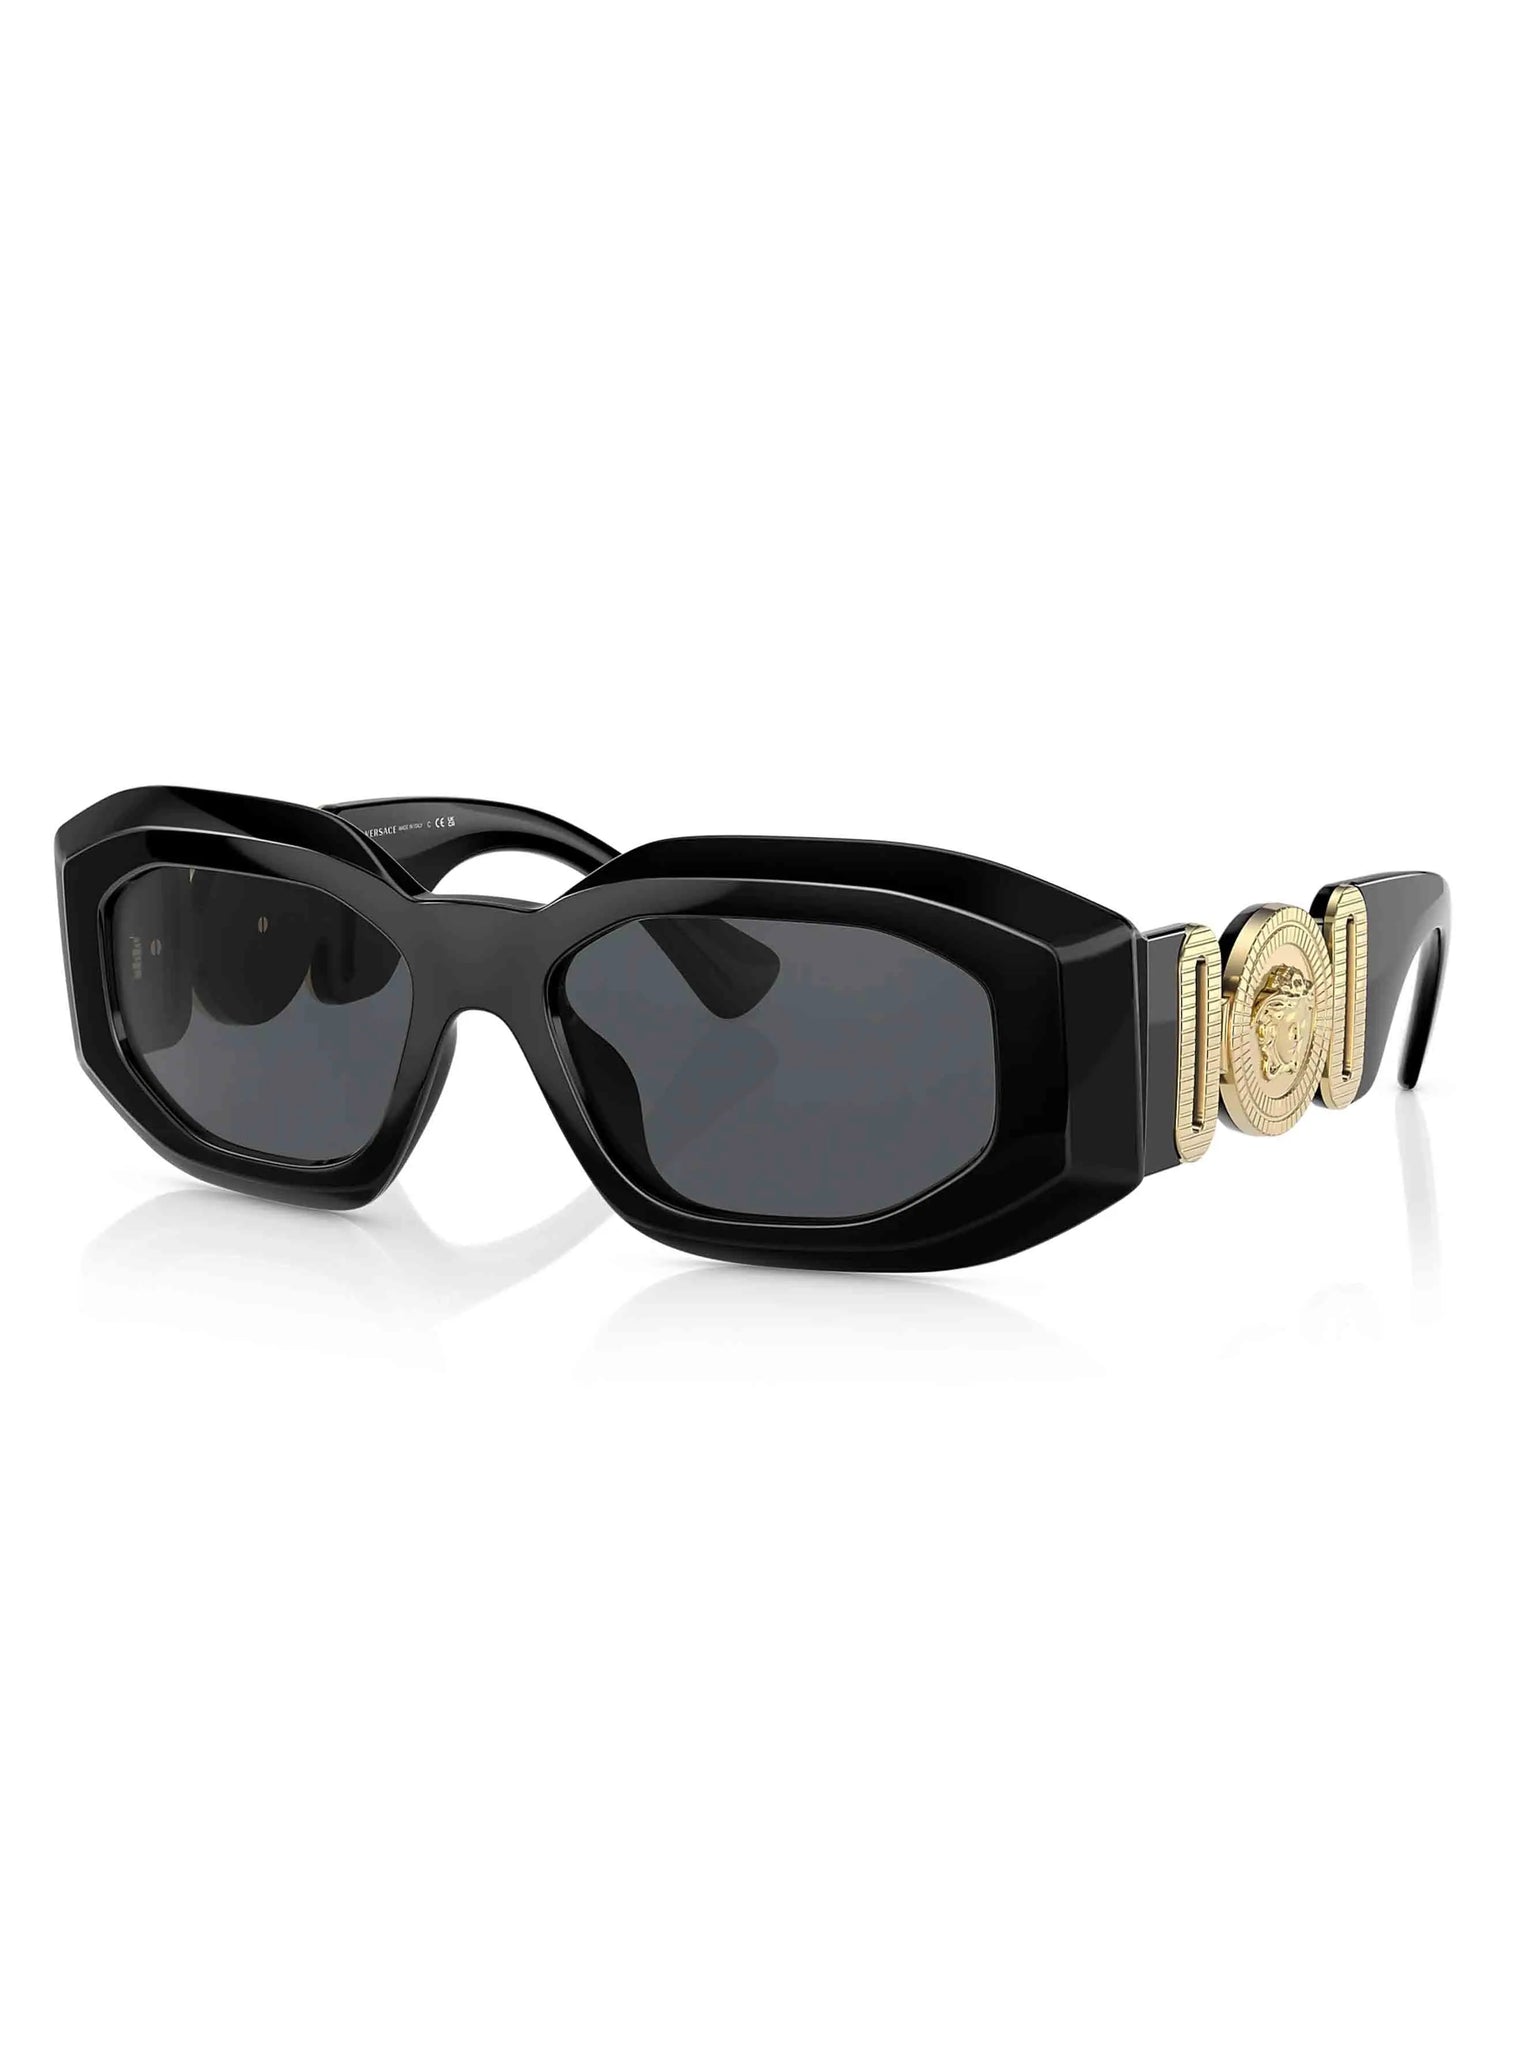 Versace VE4425U 53 Dark Grey & Black Sunglasses Prior